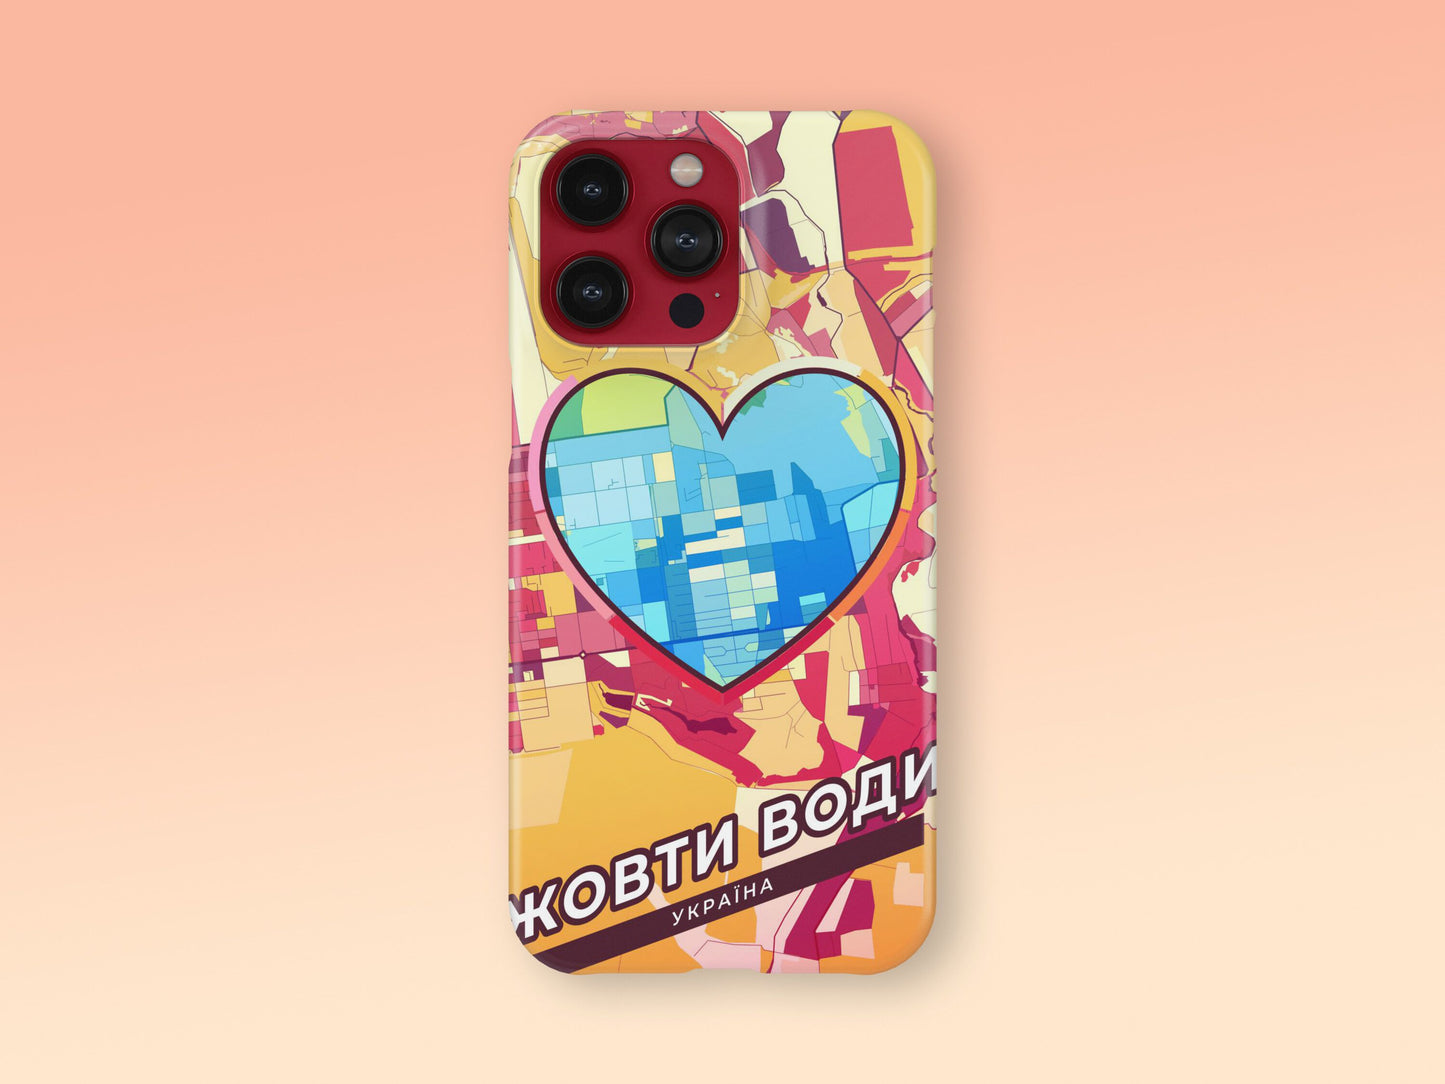 Zhovti Vody Ukraine slim phone case with colorful icon 2